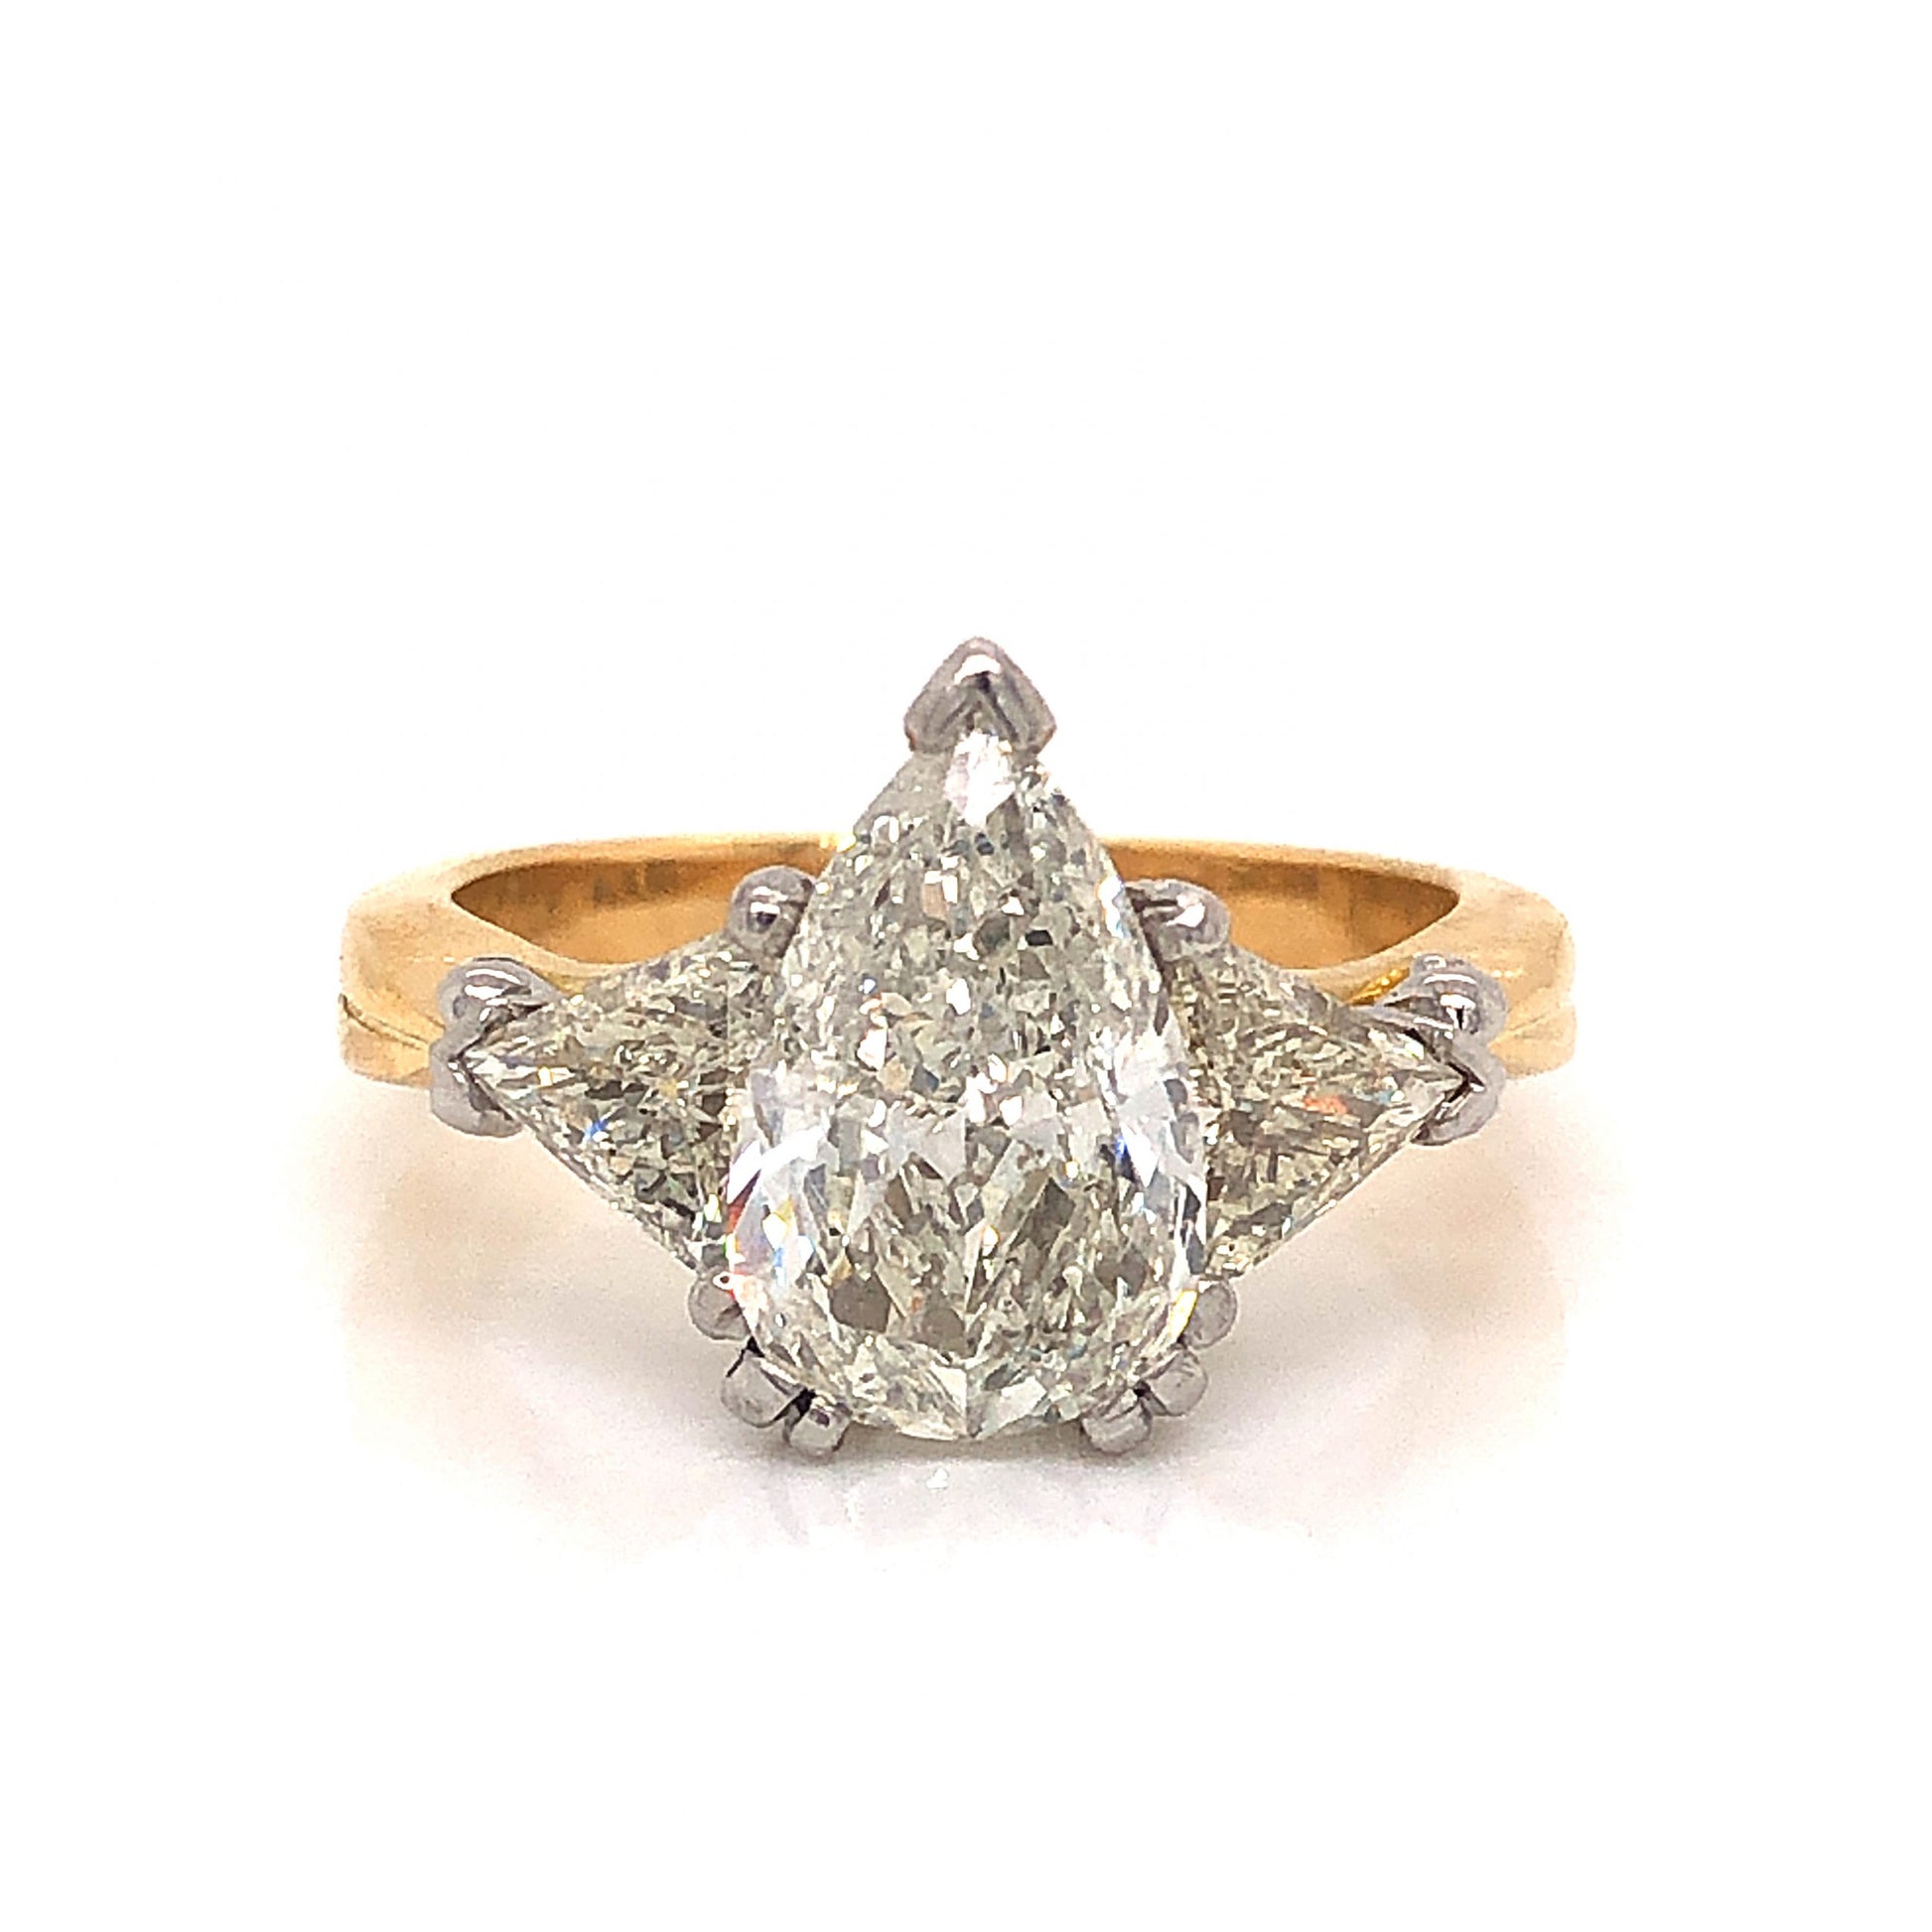 2.08 Pear Cut Diamond Engagement Ring in 18k GoldComposition: 18 Karat Yellow Gold/18 Karat White GoldRing Size: 6.75Total Diamond Weight: 3.13 ctTotal Gram Weight: 6.3 g